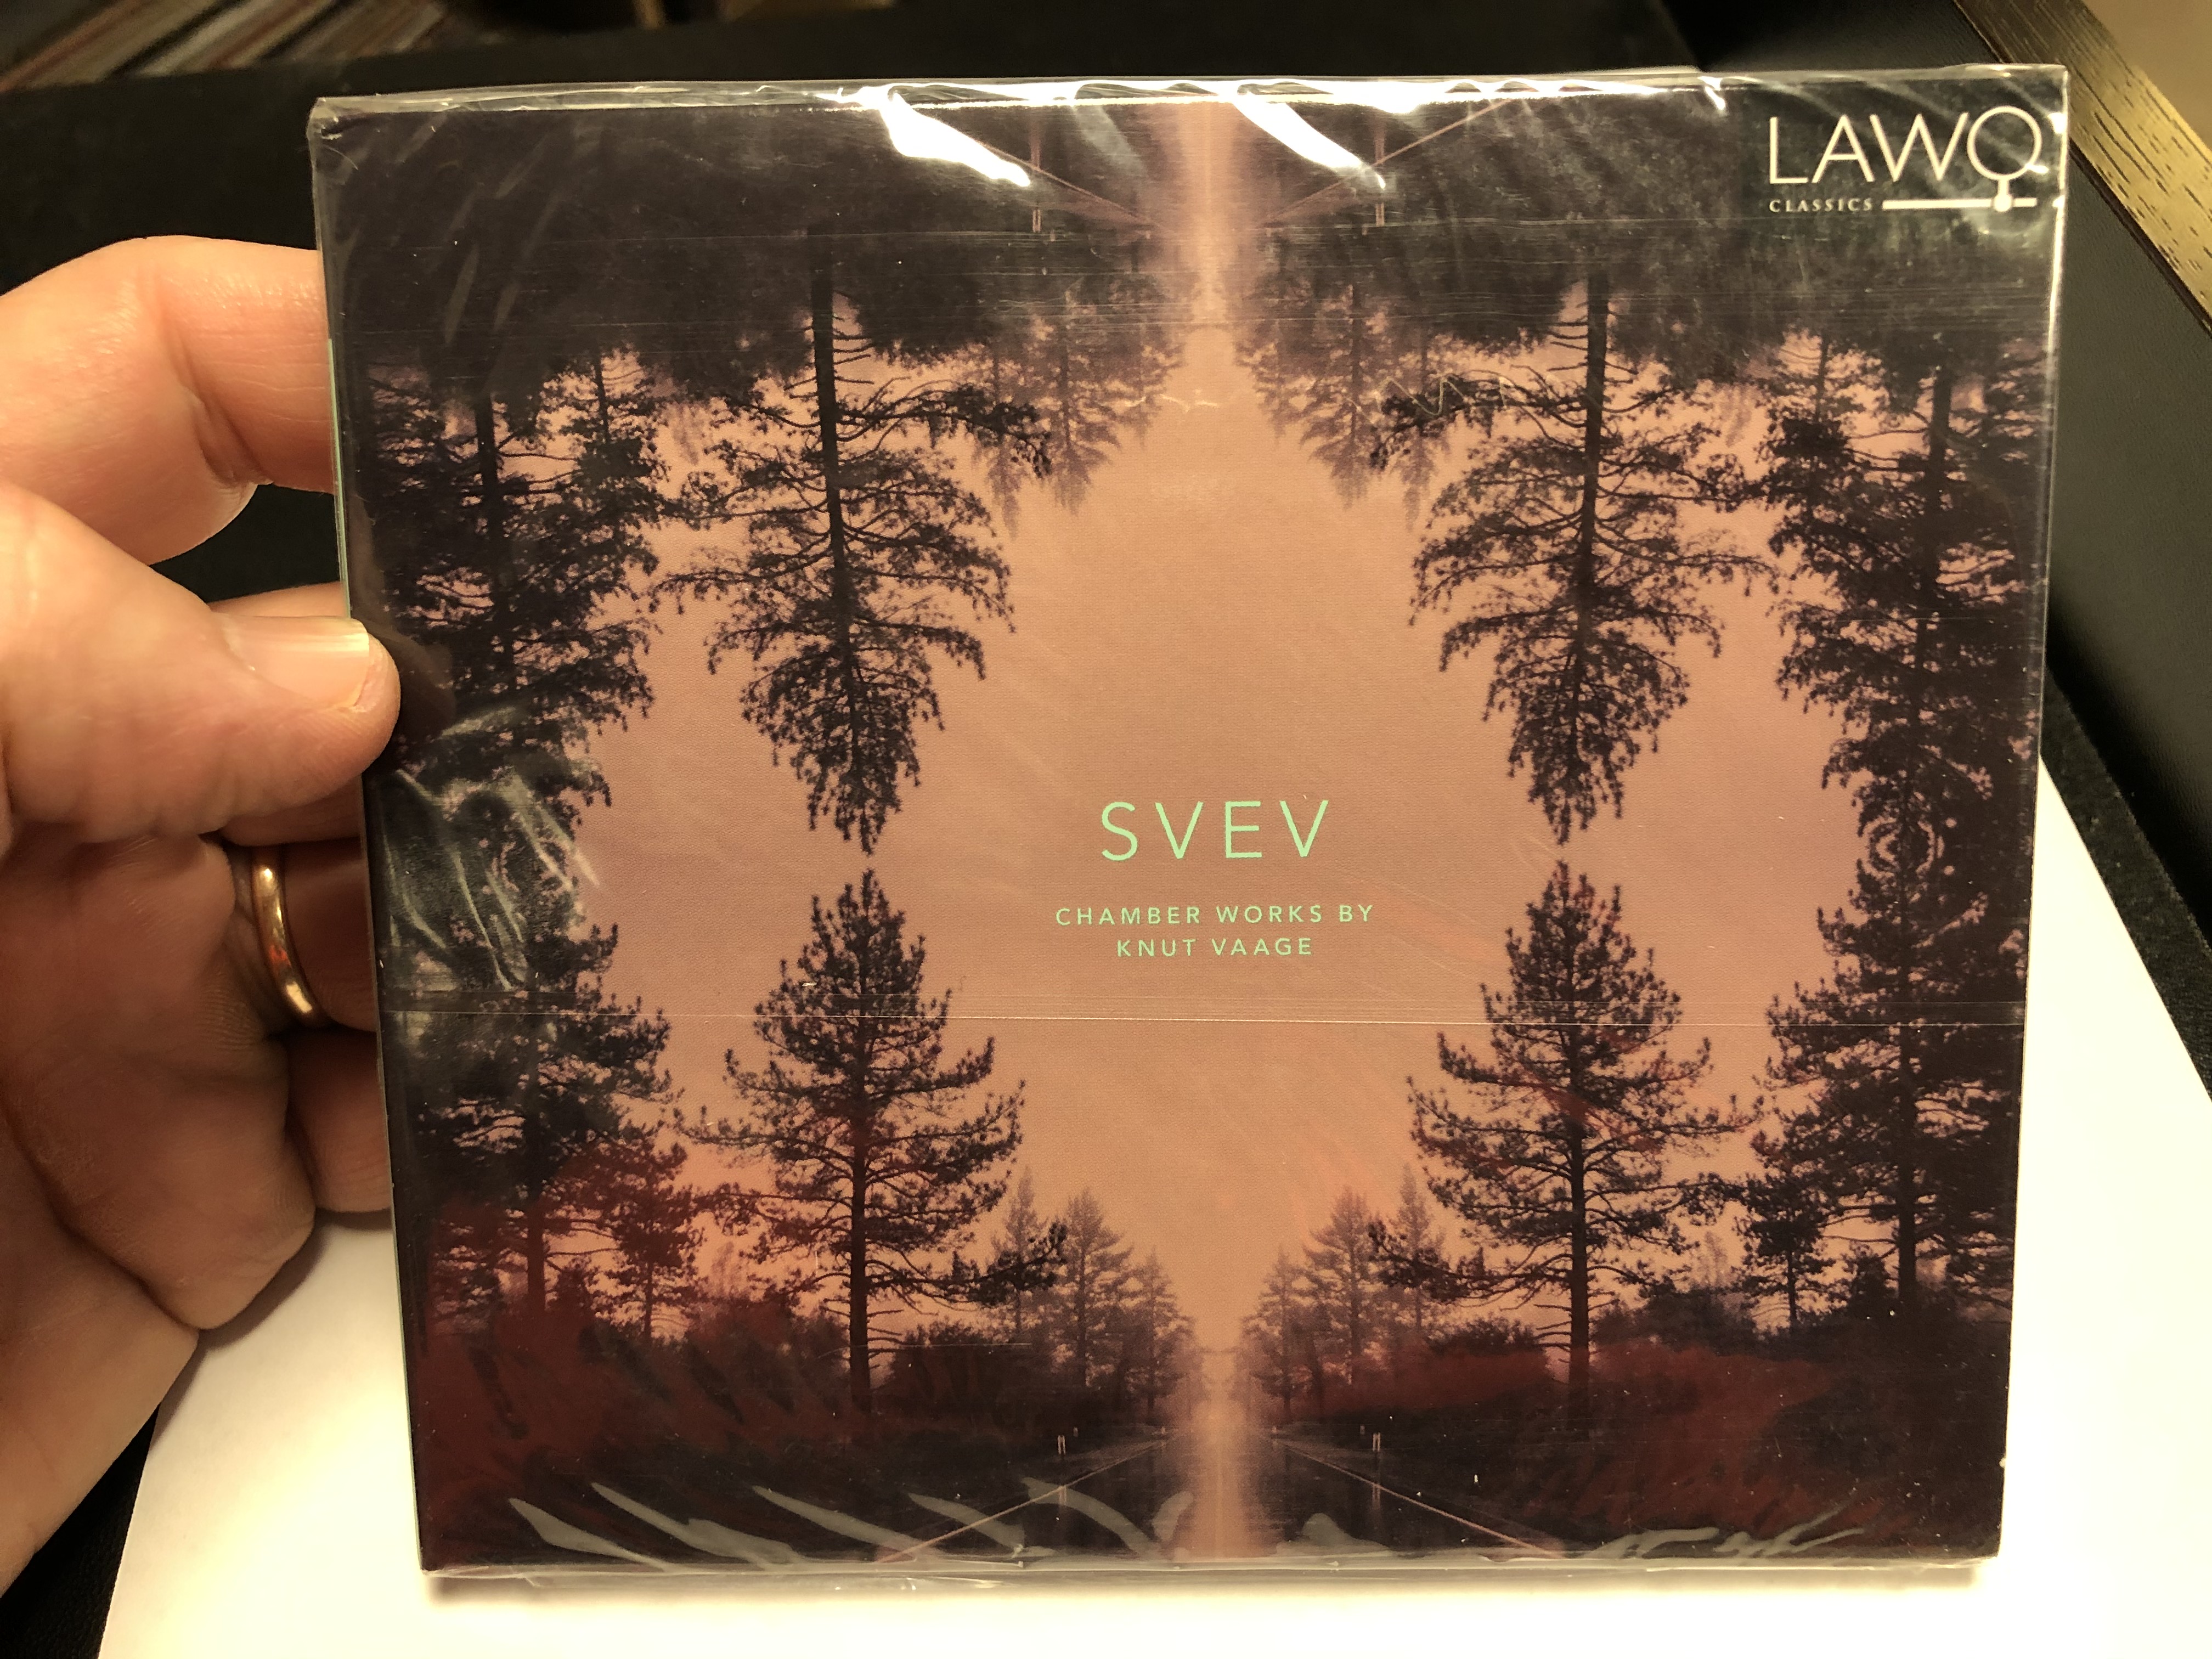 svev-chamber-works-by-knut-vaage-lawo-classics-audio-cd-2020-stereo-lwc1199-1-.jpg